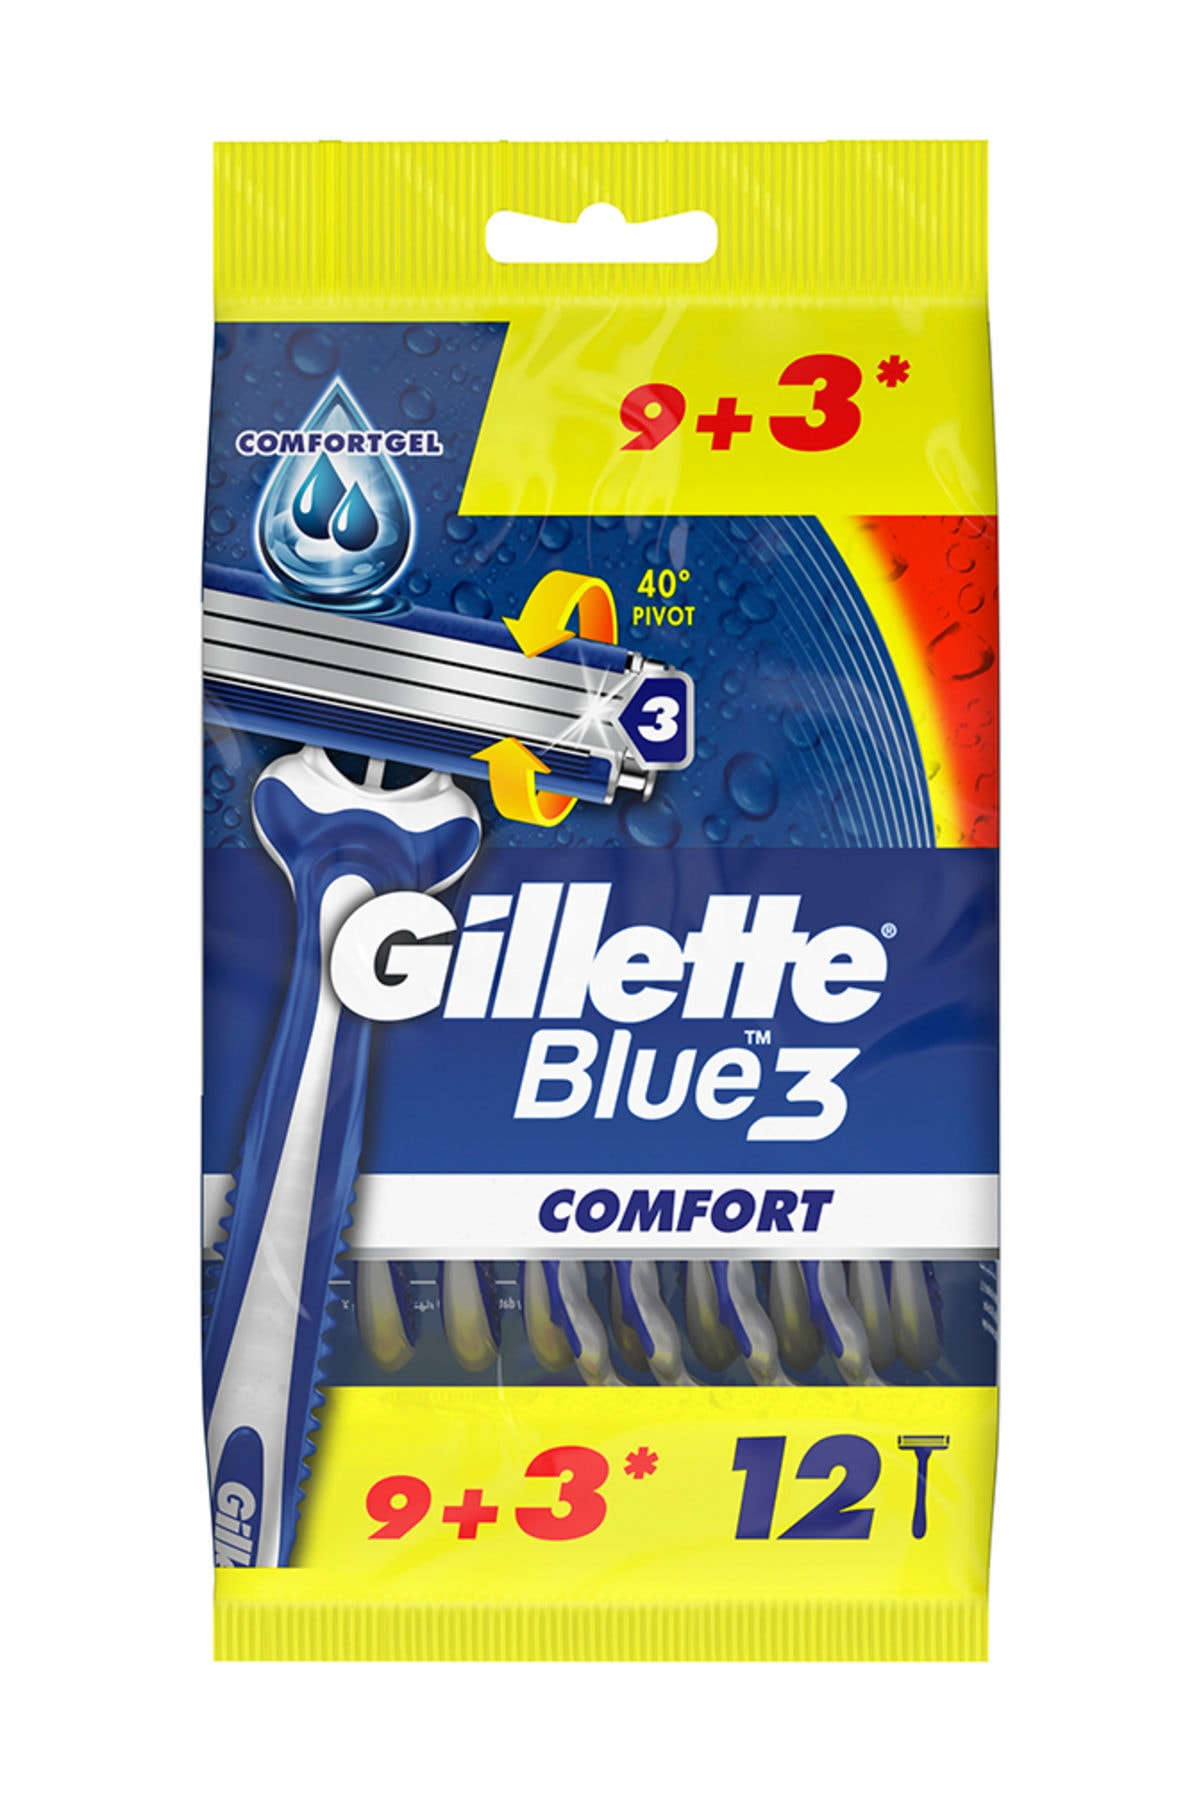 Gillette Gillette Blue 3 Tıraş Bıçağı 9+3